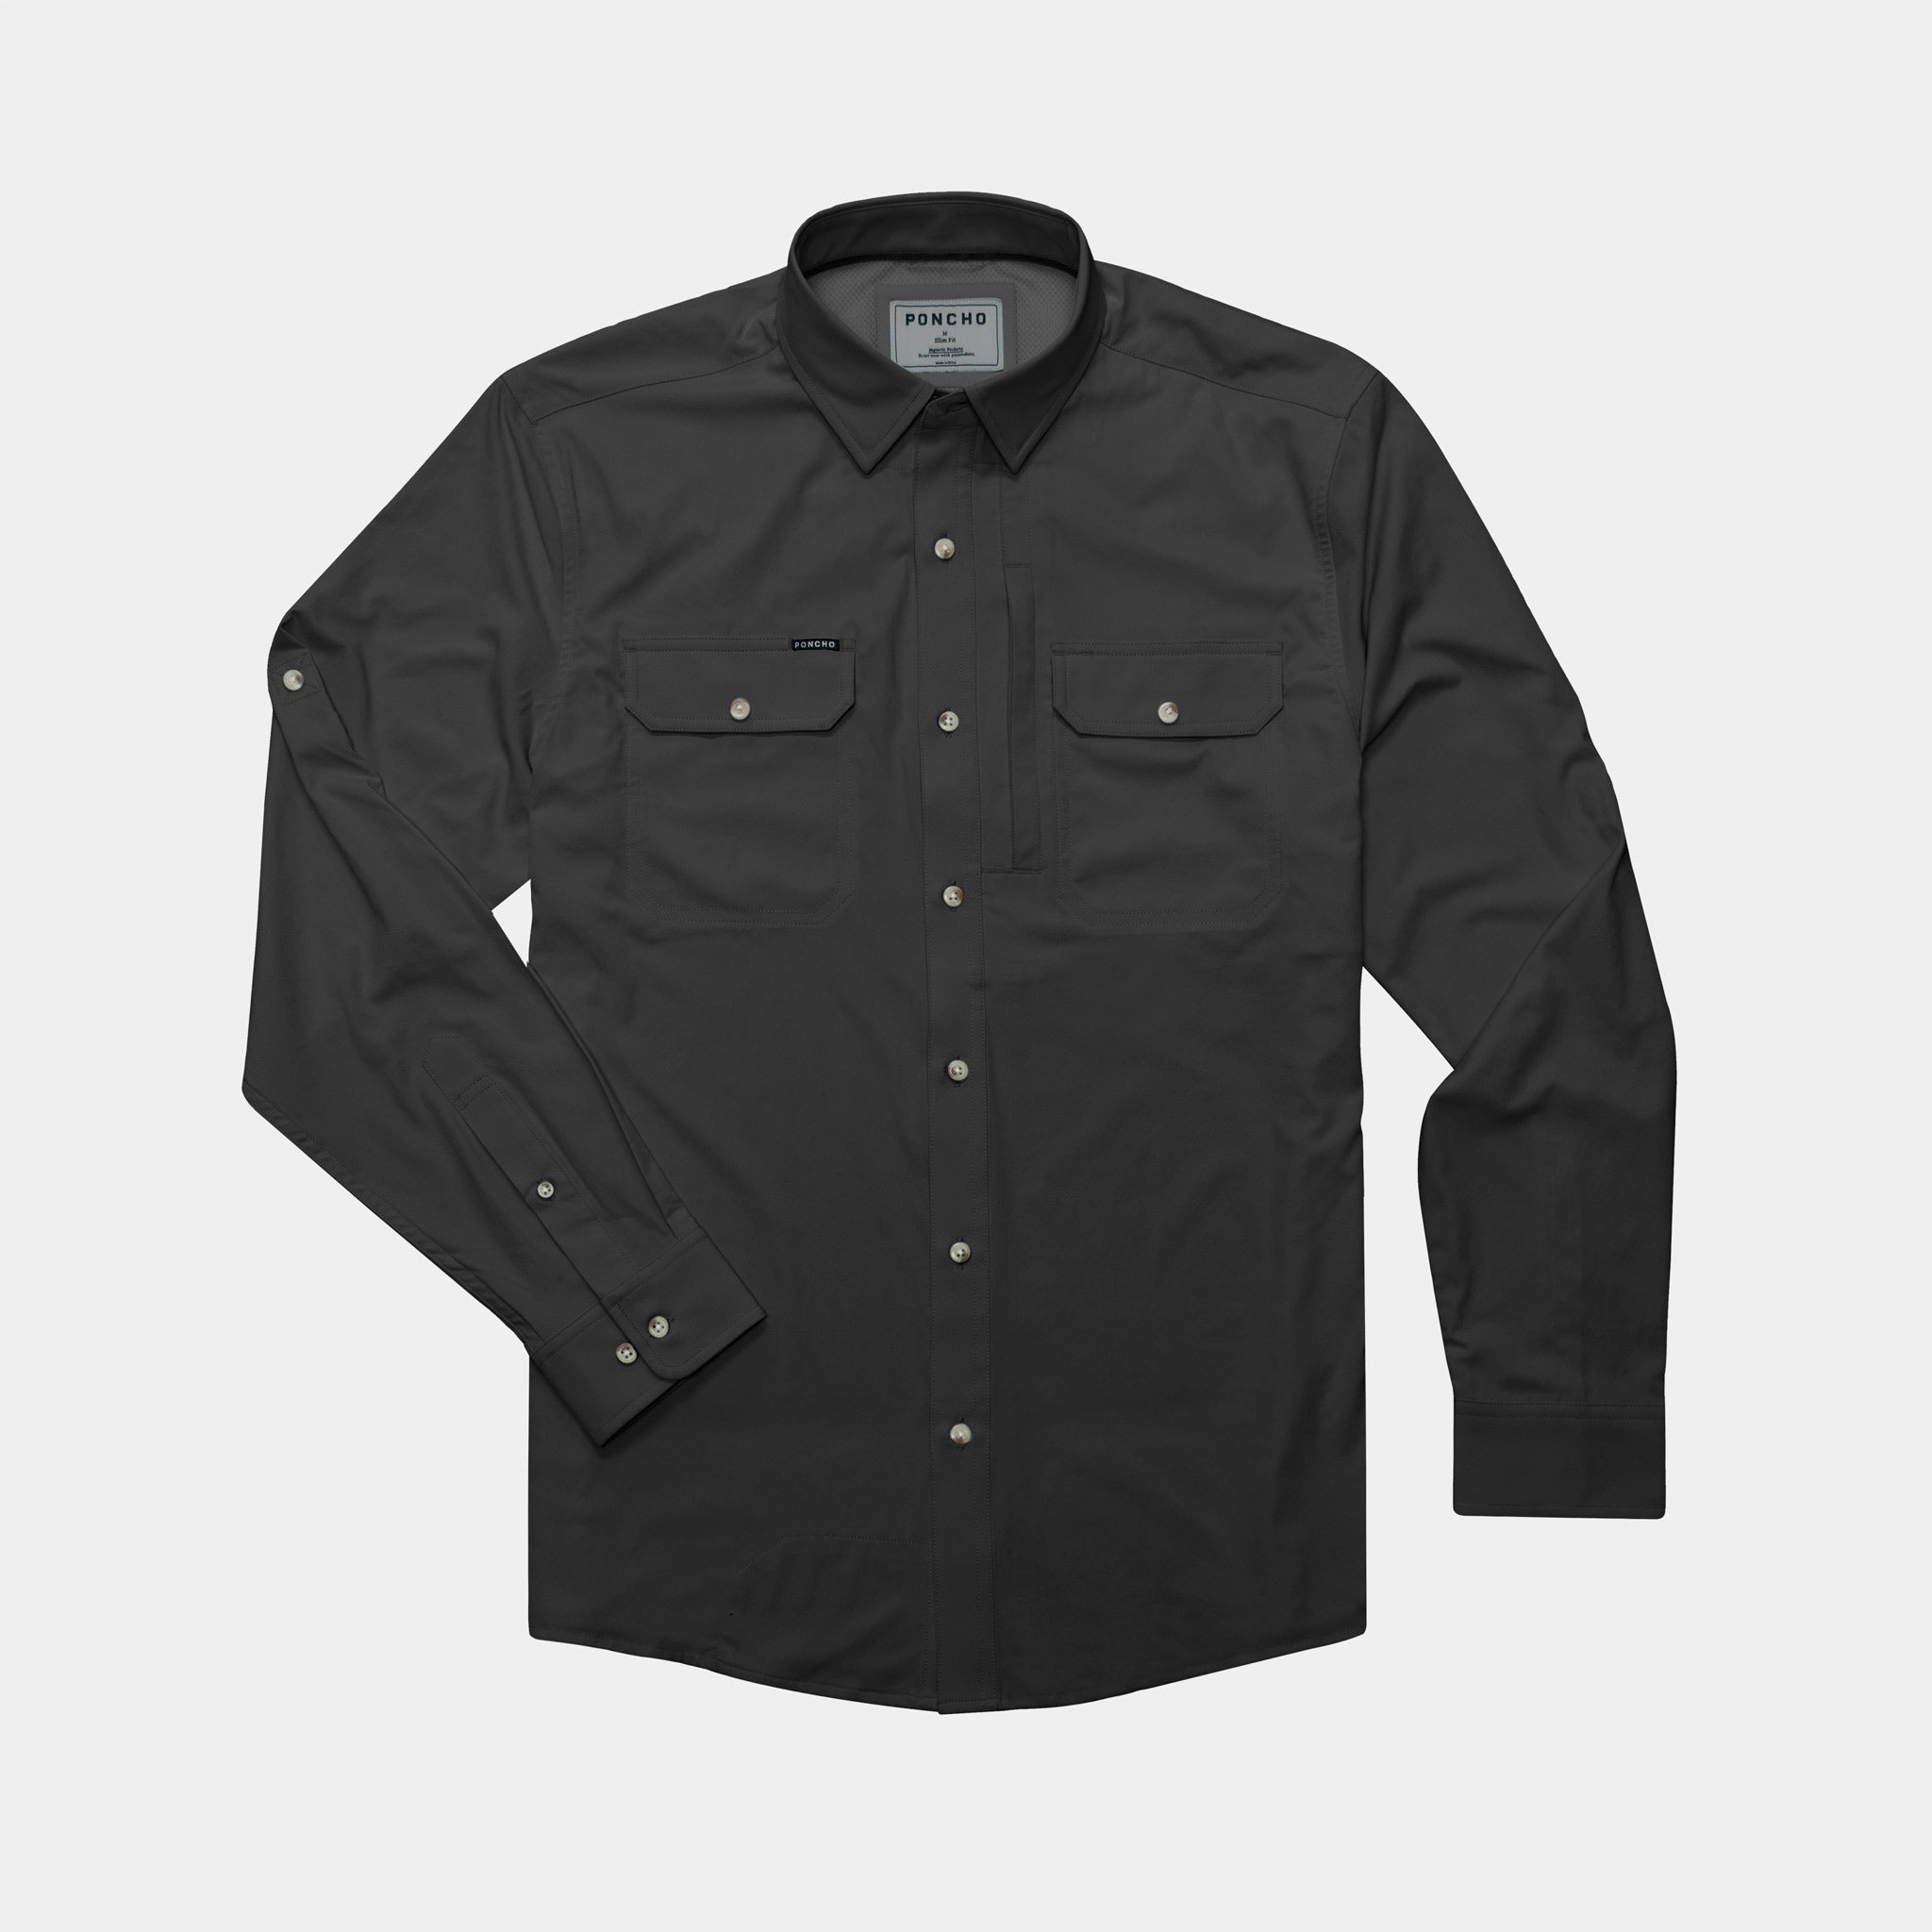 Poncho Fishing Shirt | Black Long Sleeve